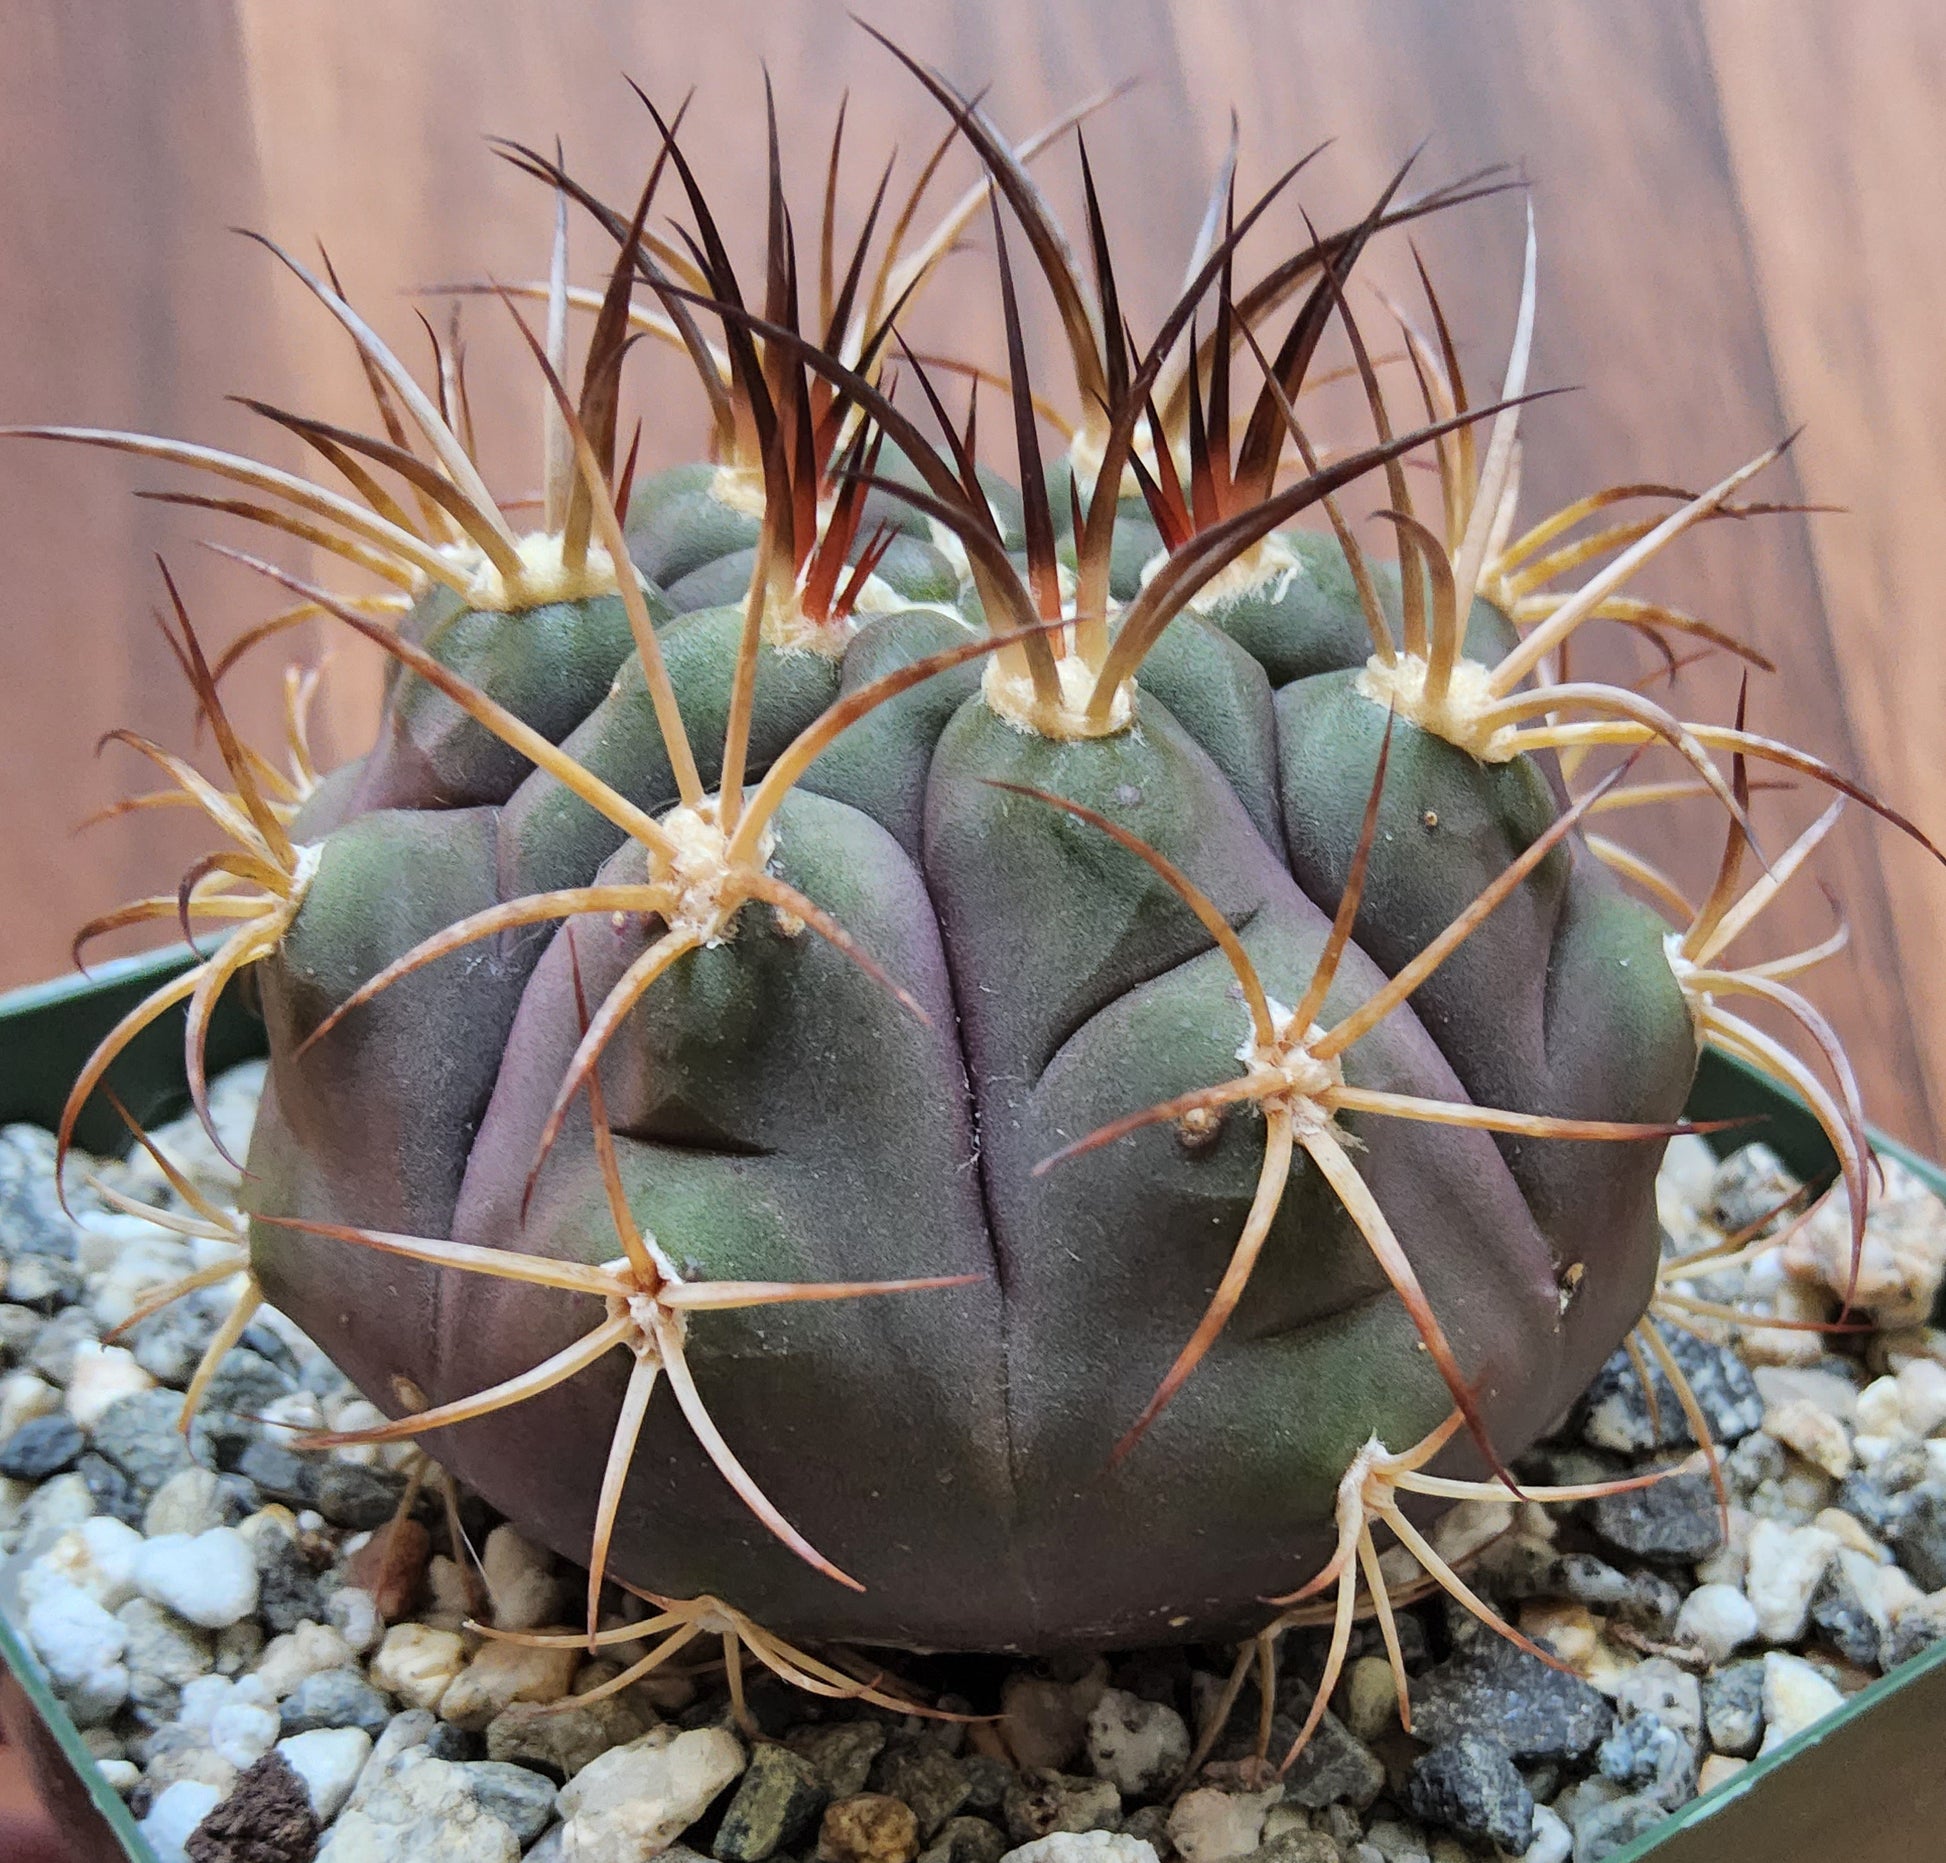 Gymnocalycium pflanzii v. albipulpa Live Cactus Growing in 4 Inch